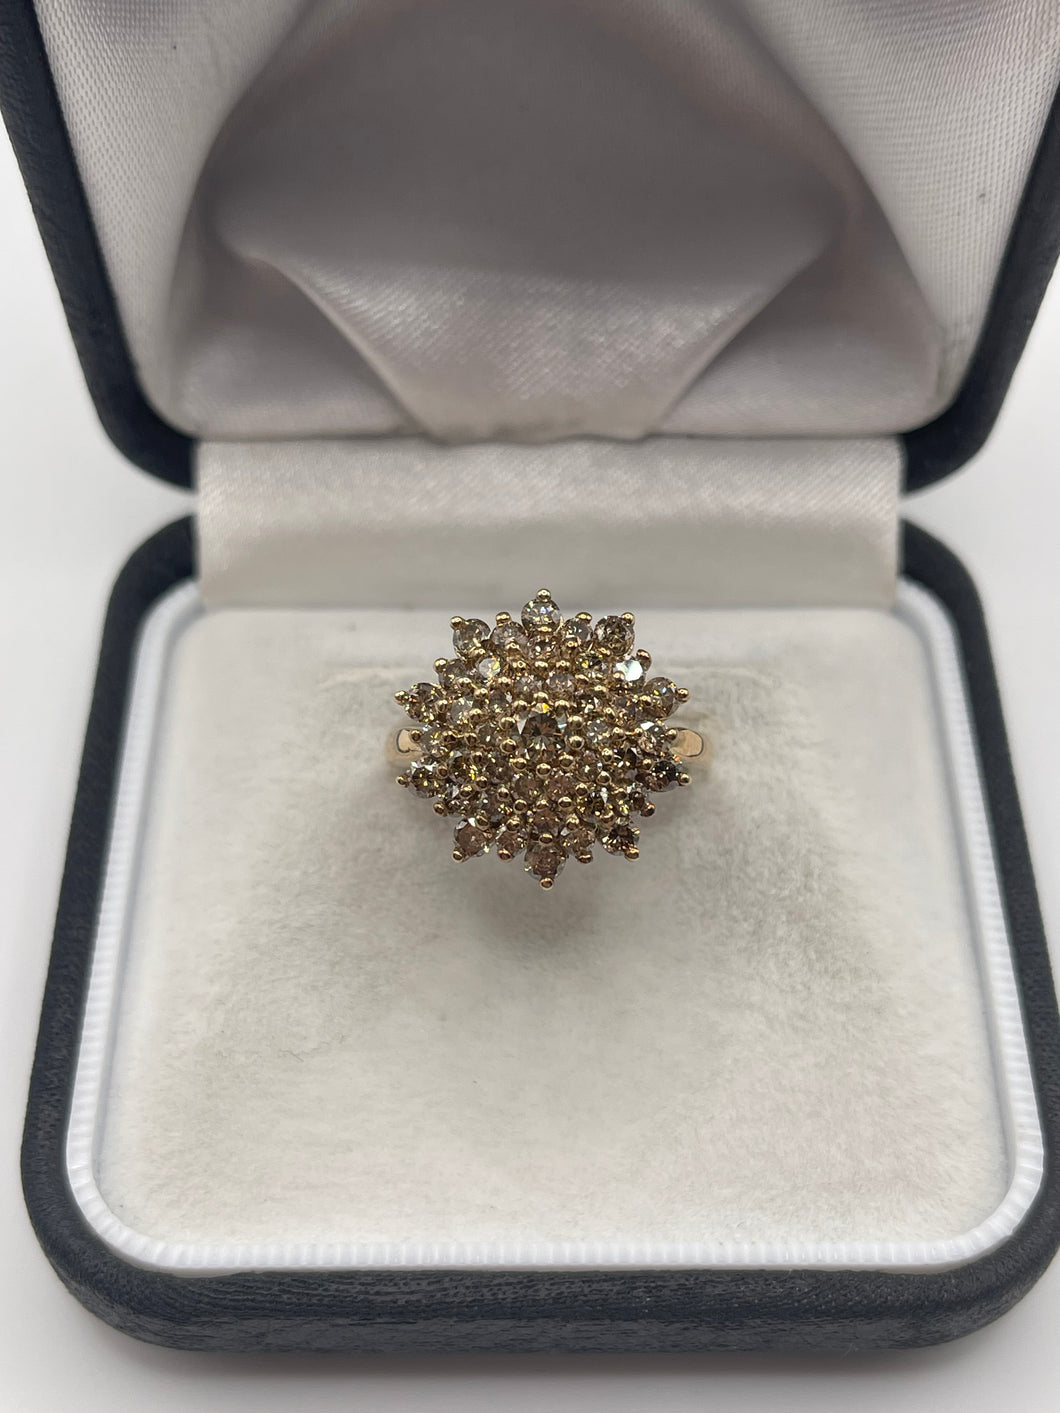 9ct gold 1.95ct cognac diamond cluster ring